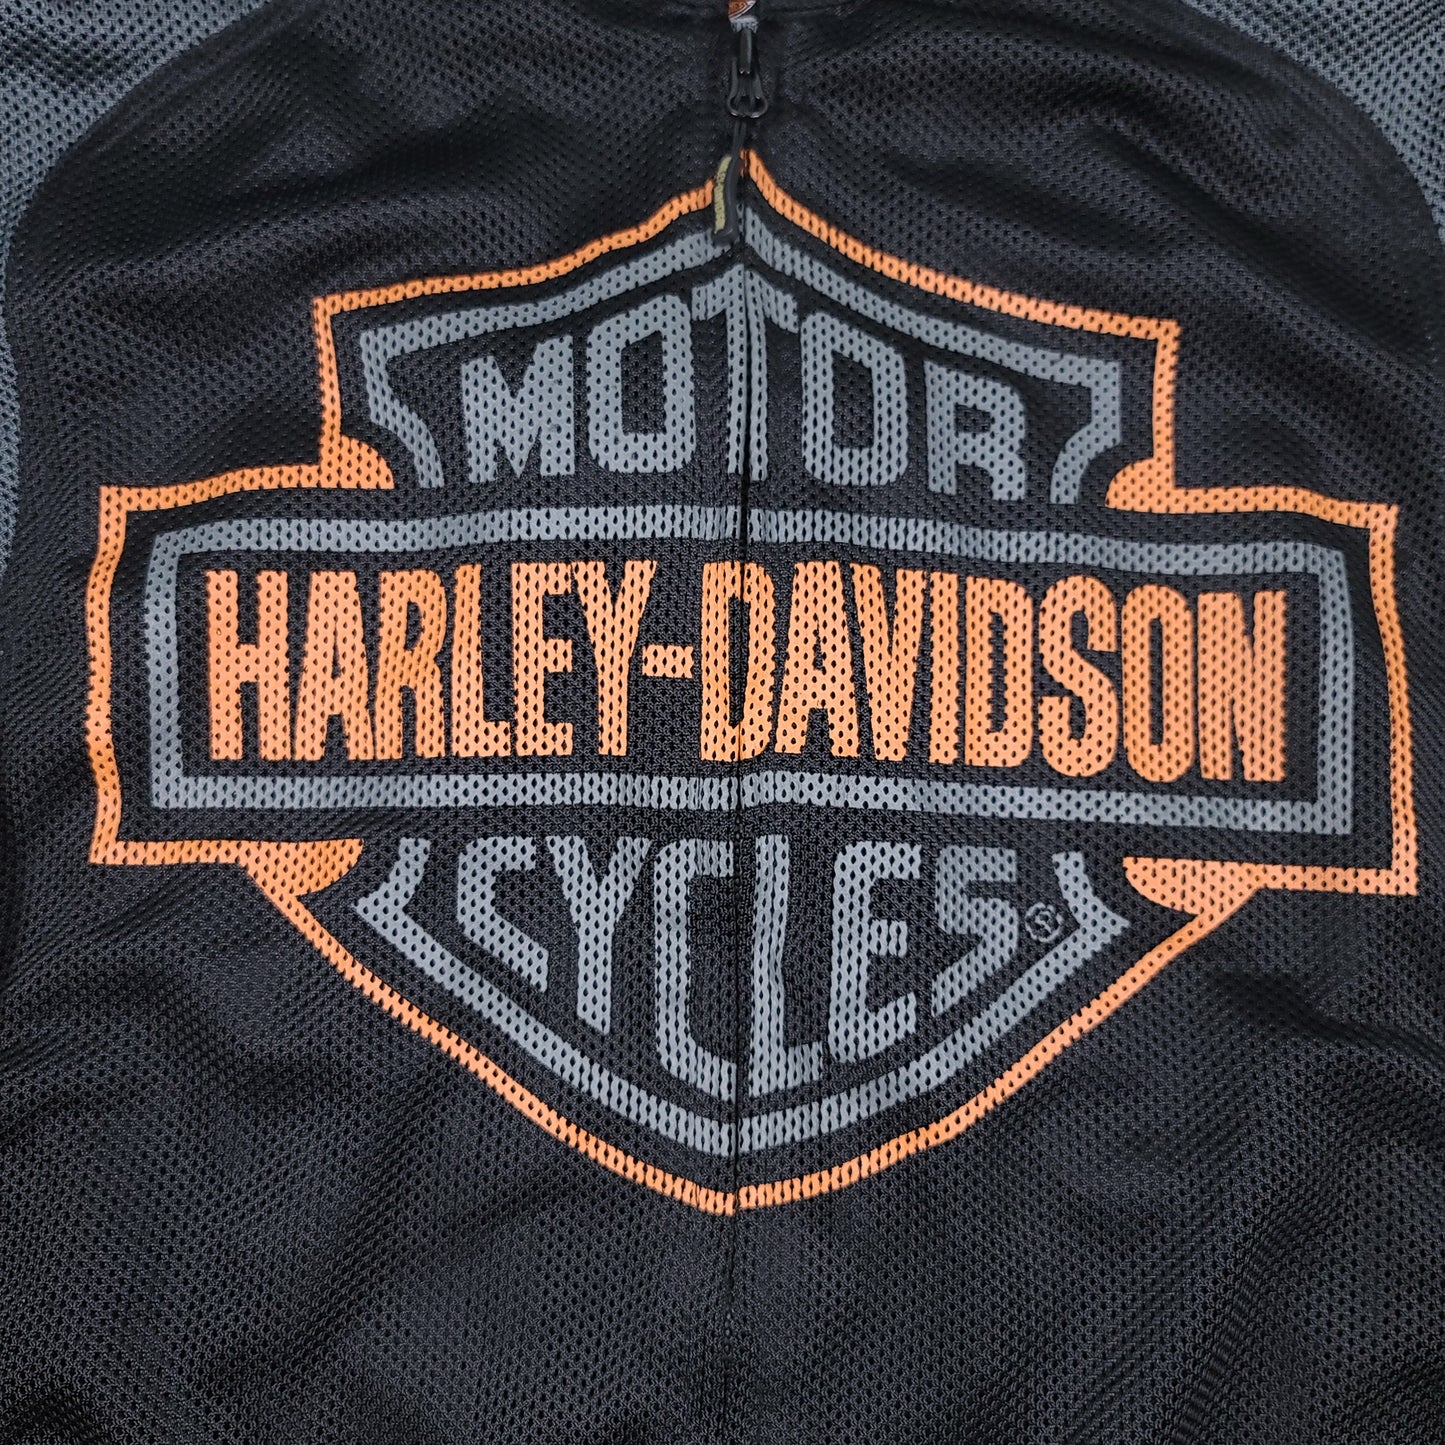 Harley Davidson Motorcycles Mesh Riding Gear Jacket